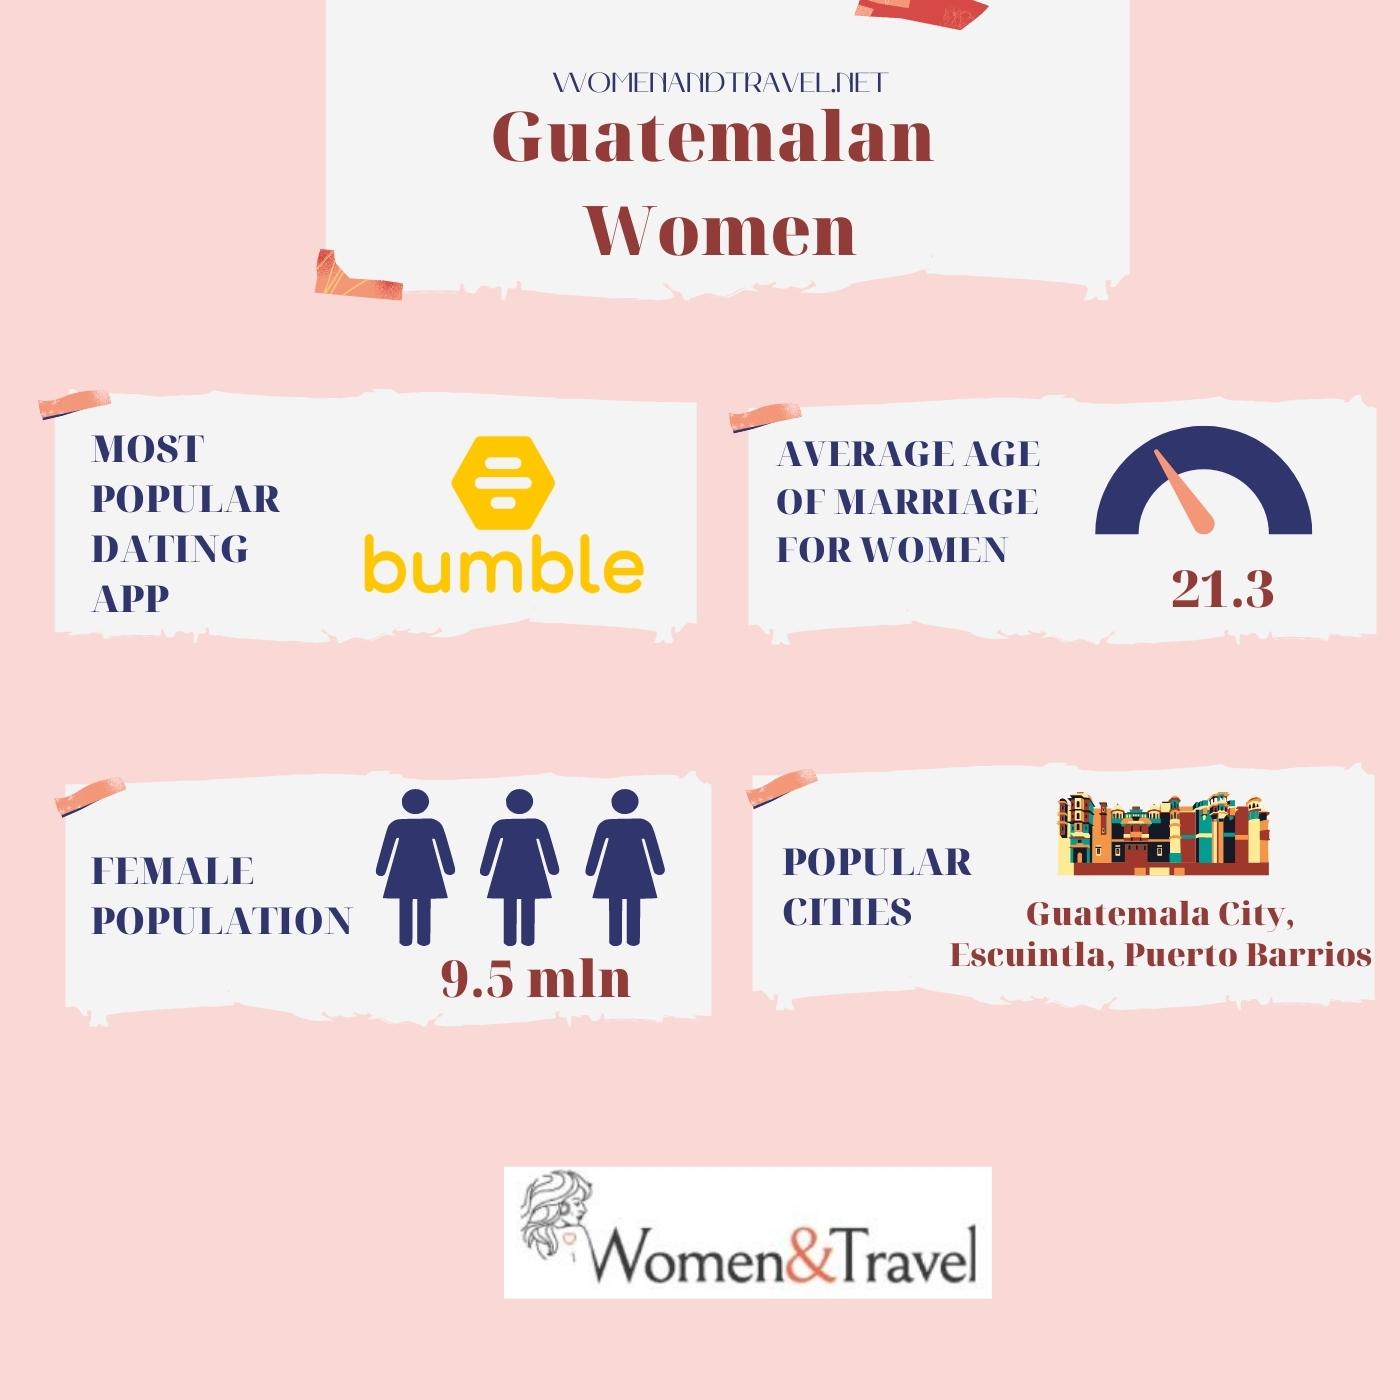 Guatemalan Women infographic